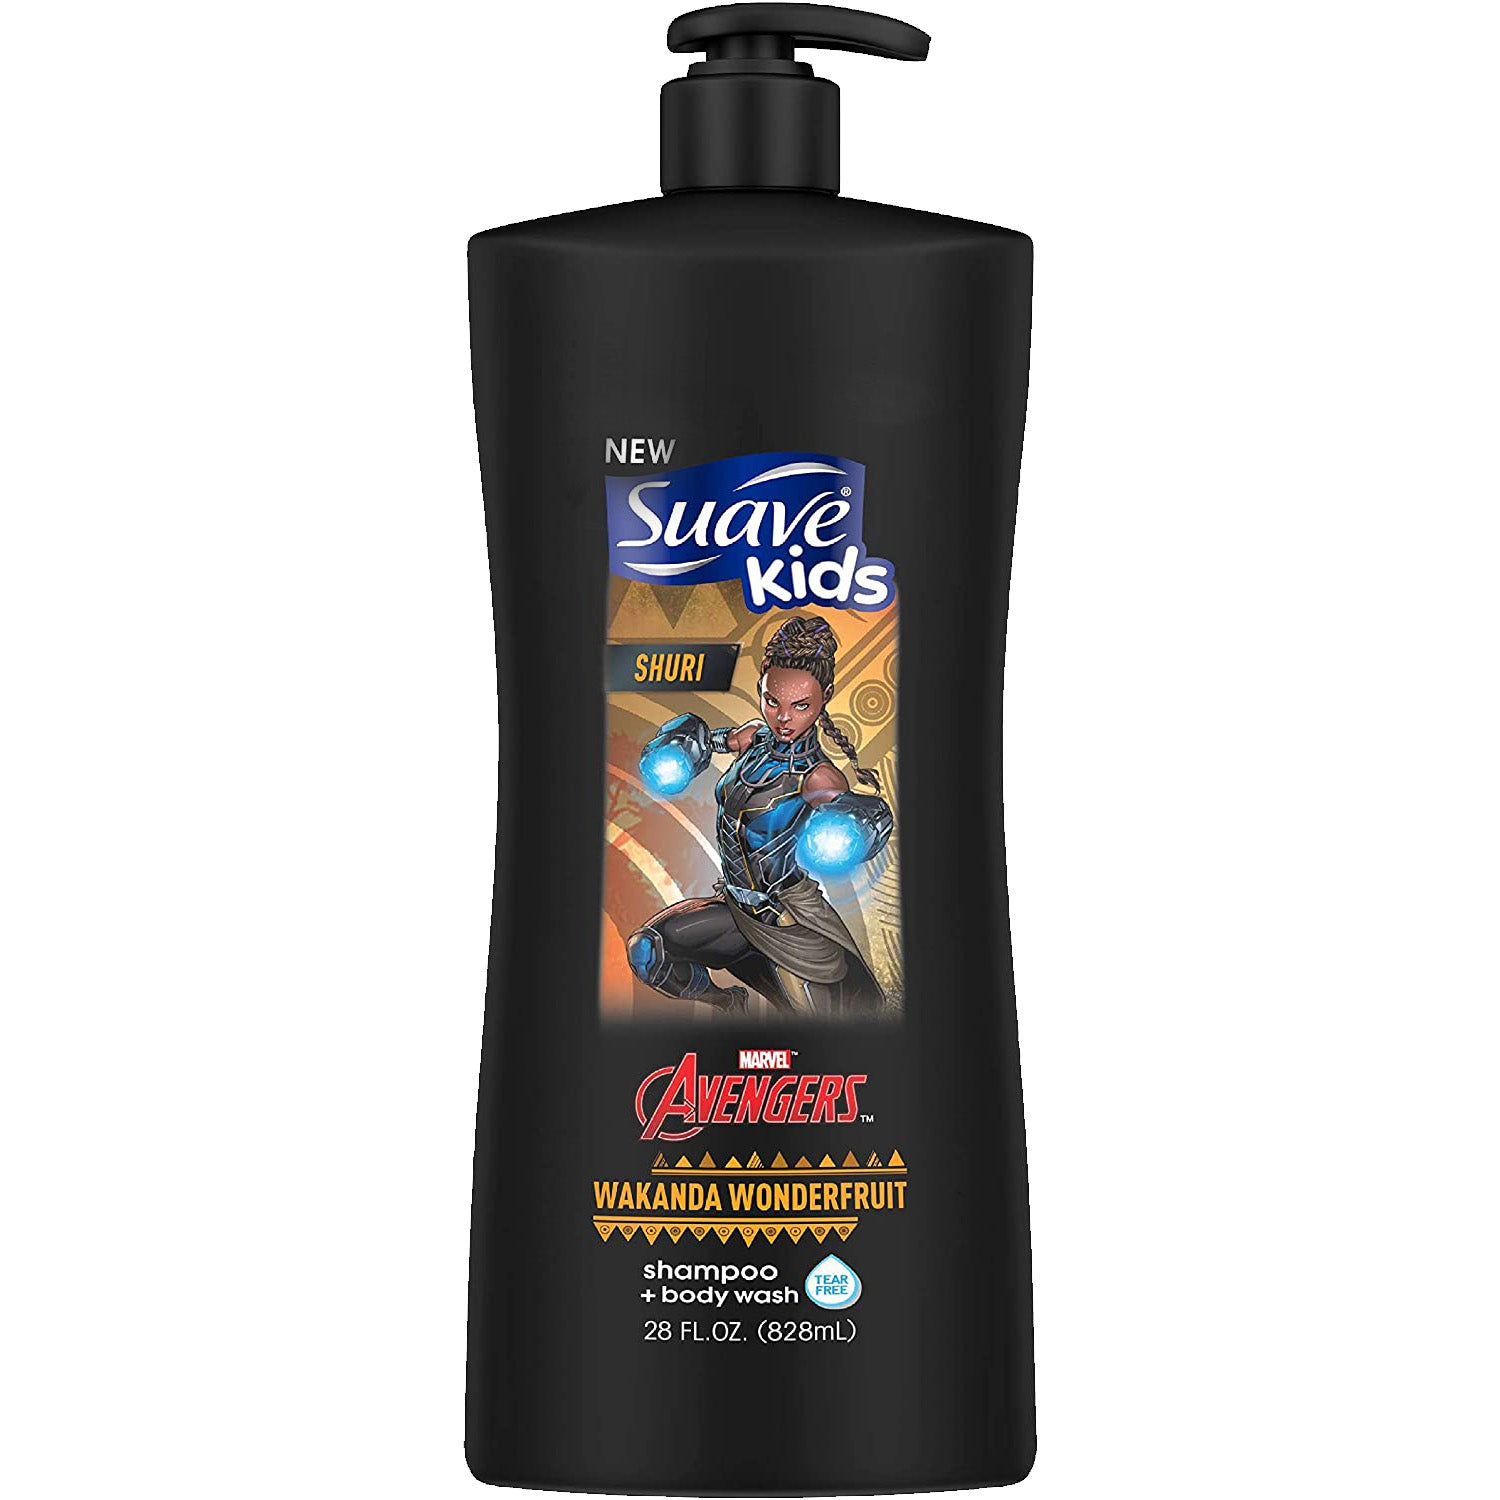 Suave Kids 2in1 Shampoo + Body Wash Avengers Shuri Wakanda Wonderfruit 828ml Black - Baby Moo